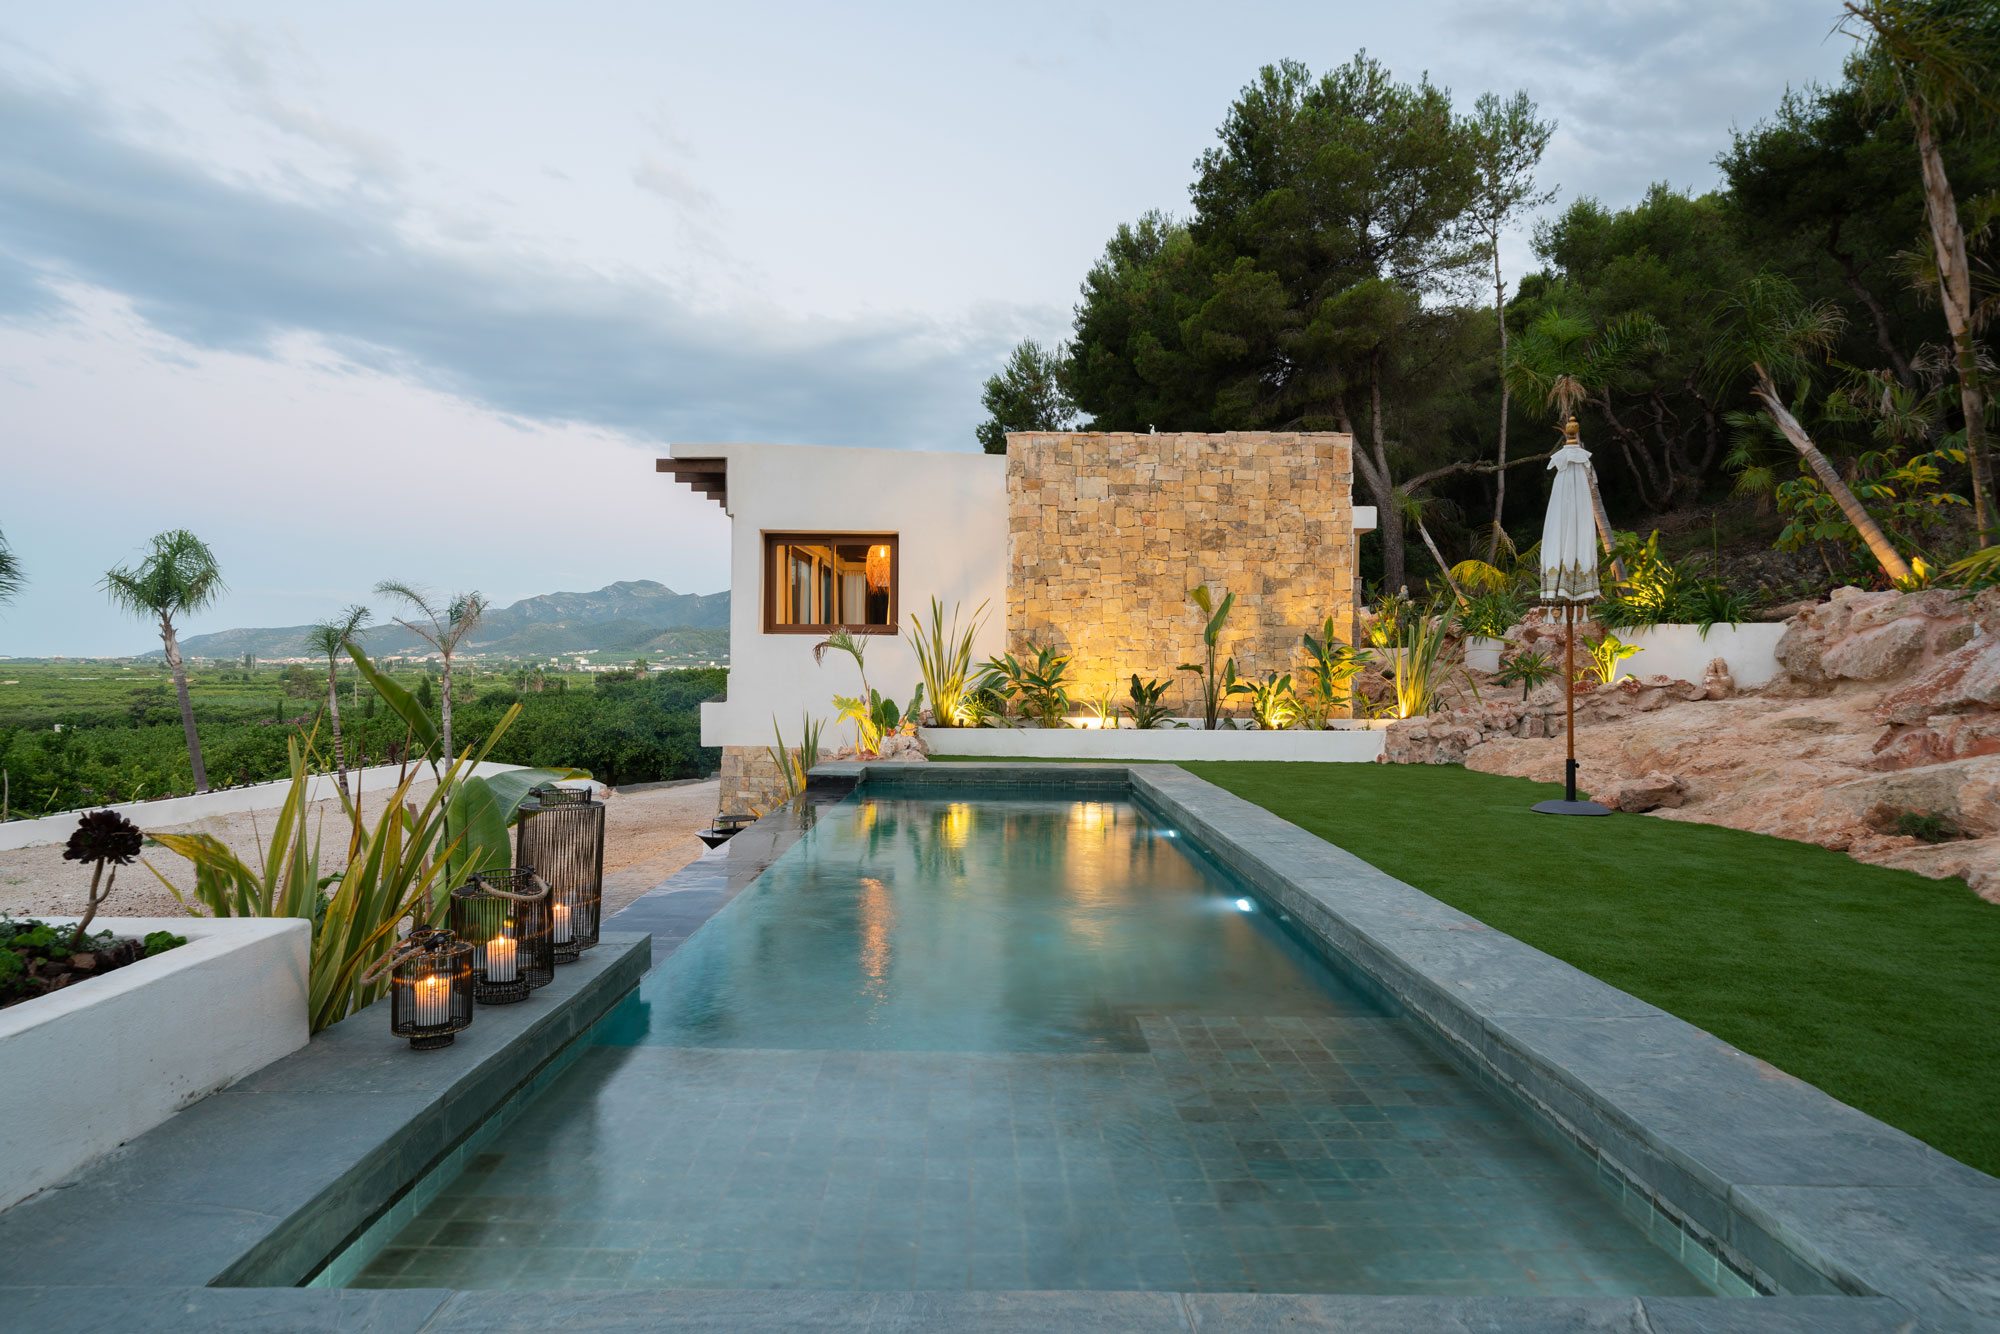 proyecto interiorismo balines hotel decoración tropical interioristas Valencia paisajismo tematización piscina piedra natural